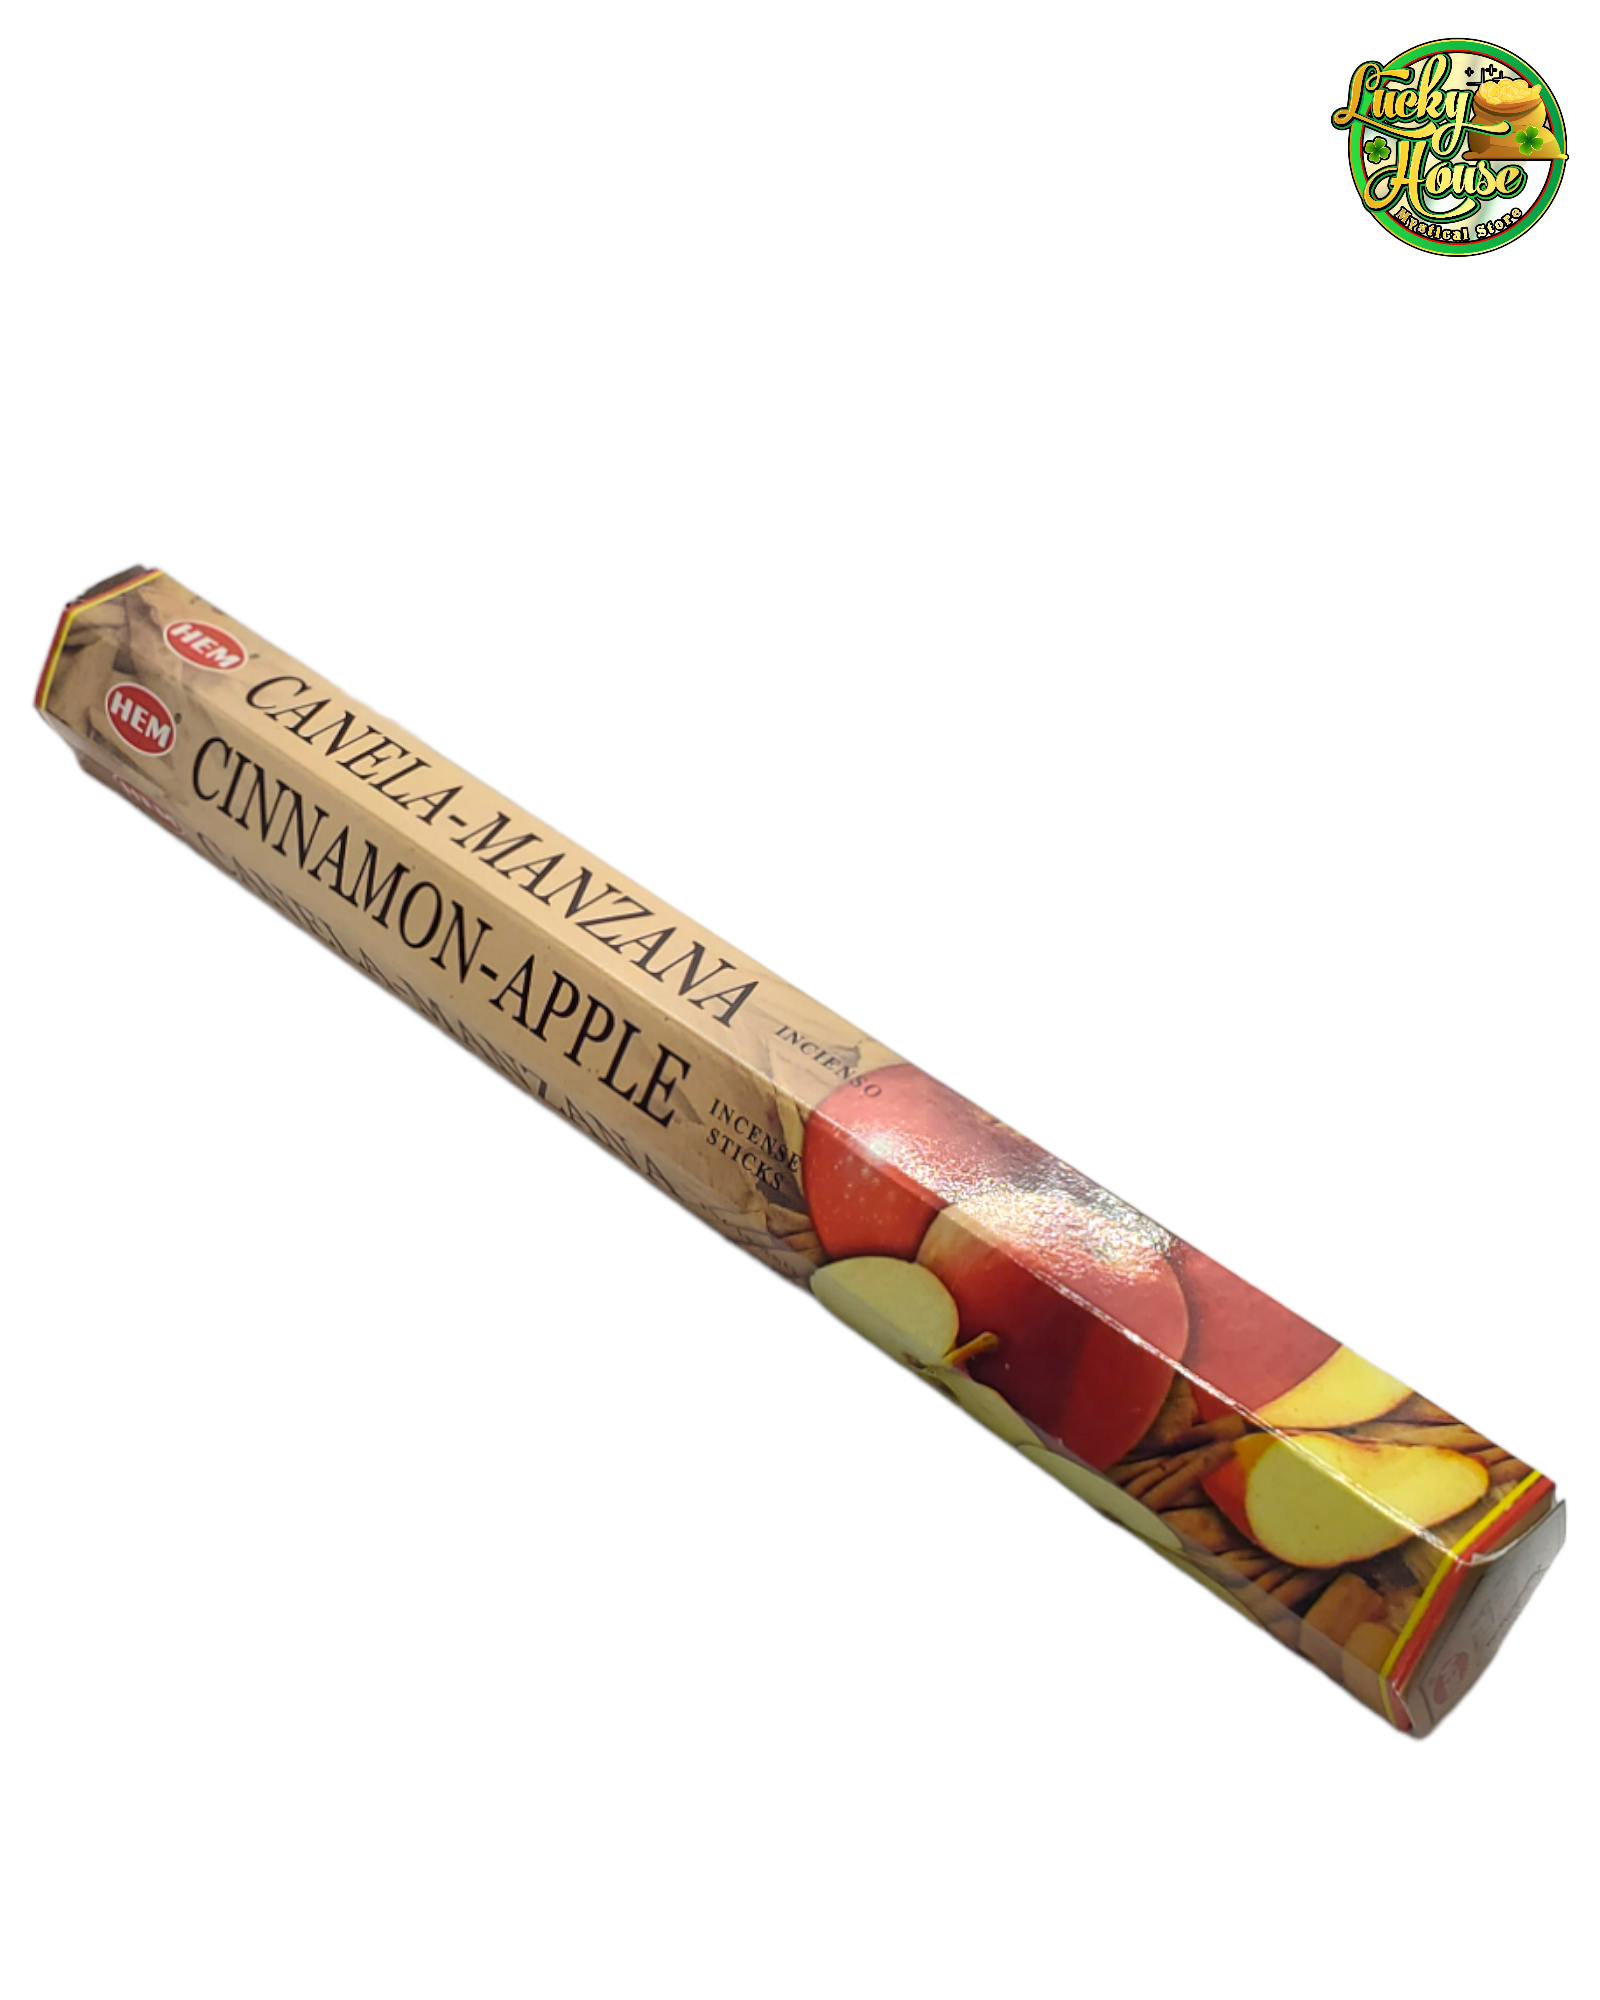 Cinnamon Apple Incense Sticks